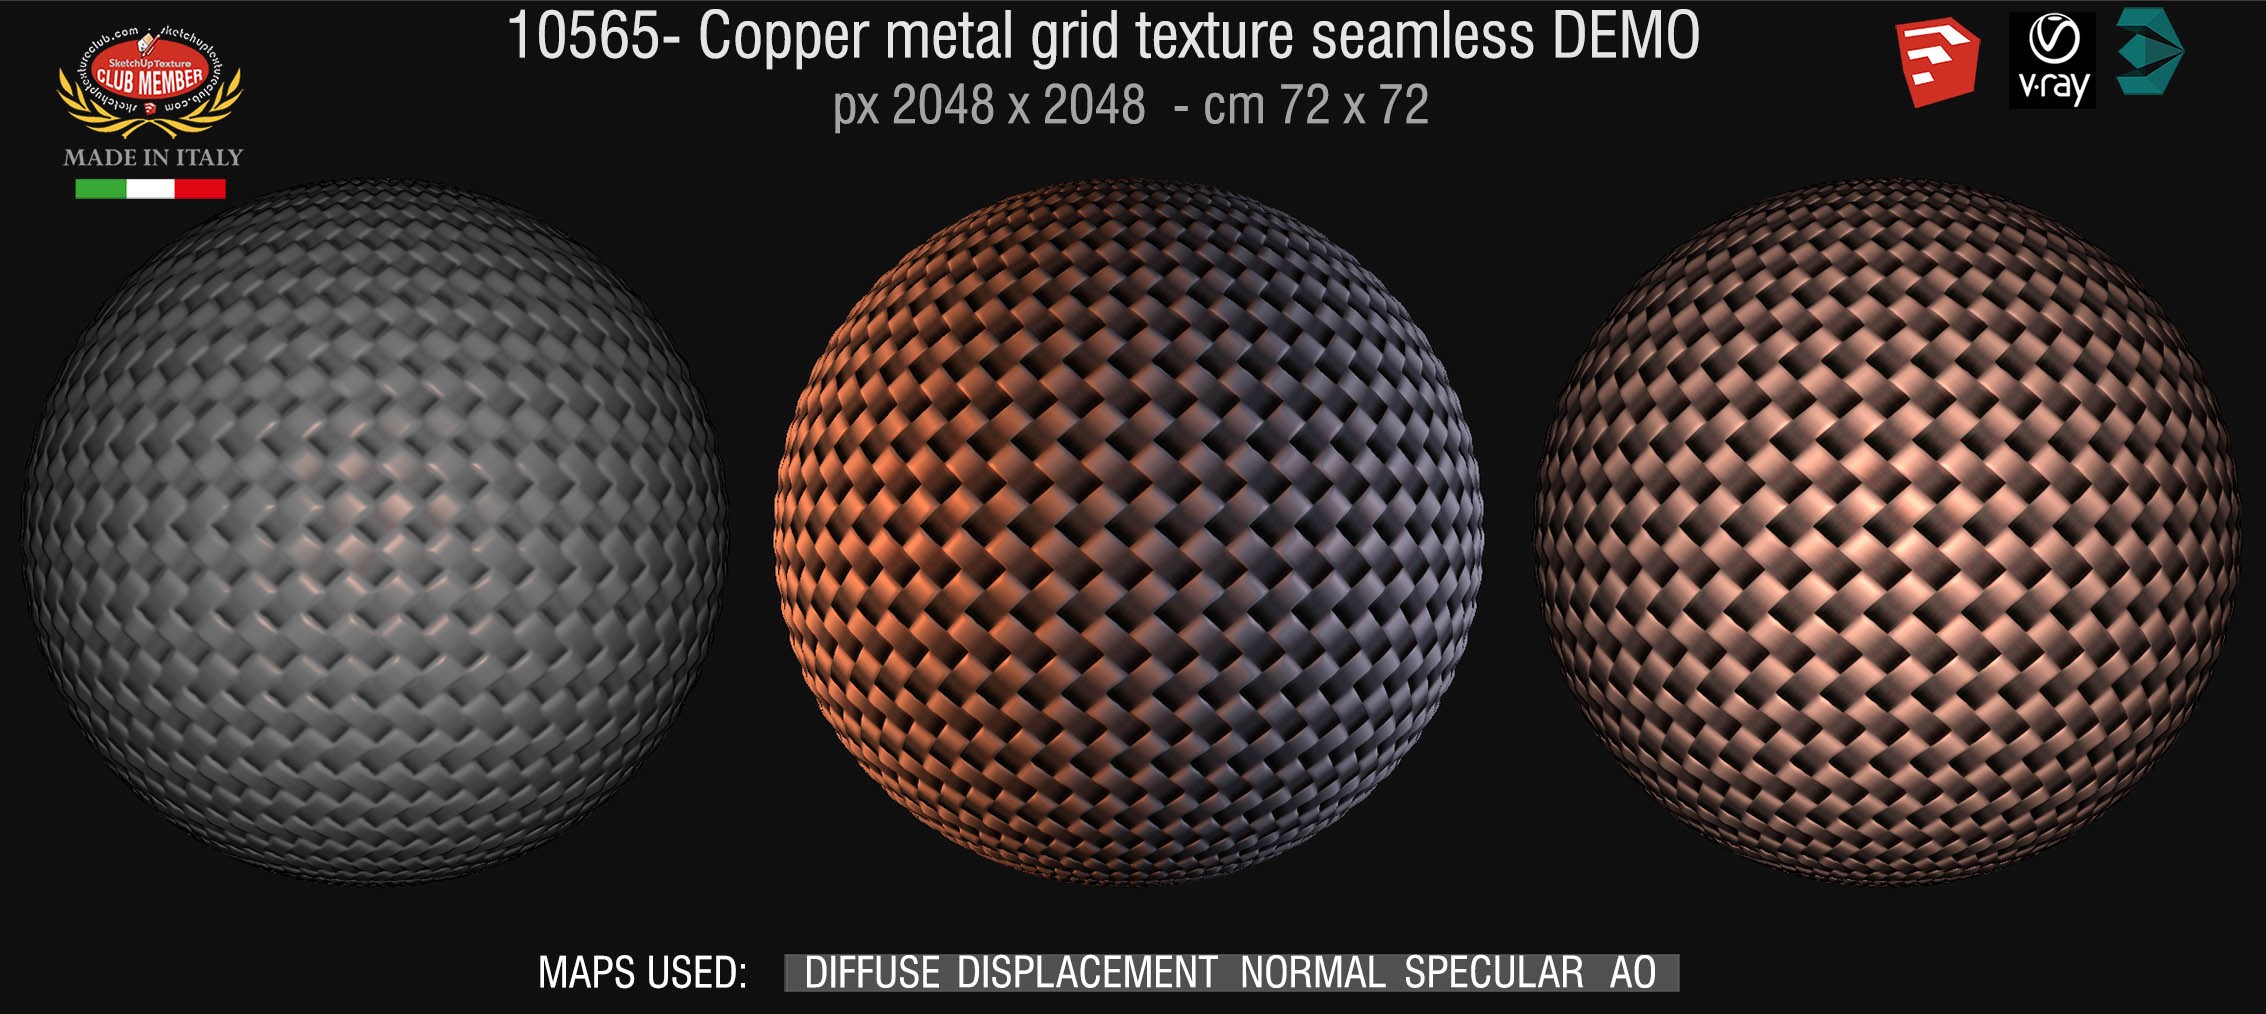 10565 HR Copper metal grid texture seamless + maps DEMO